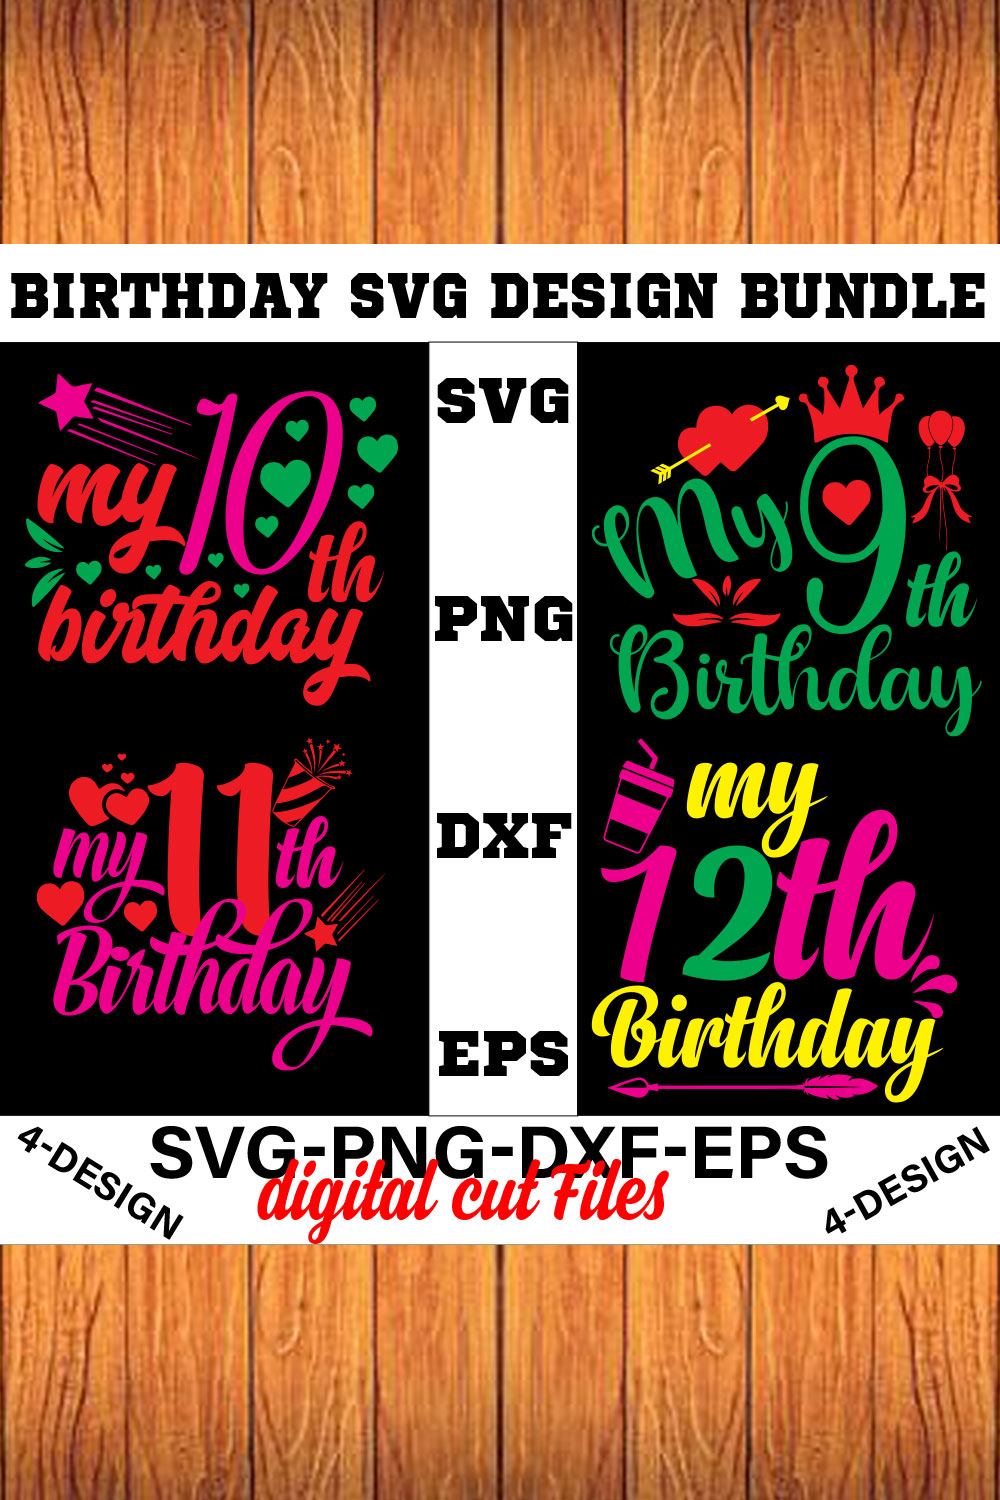 birthday svg design bundle Happy birthday svg bundle hand lettered birthday svg birthday party svg Volume-03 pinterest preview image.